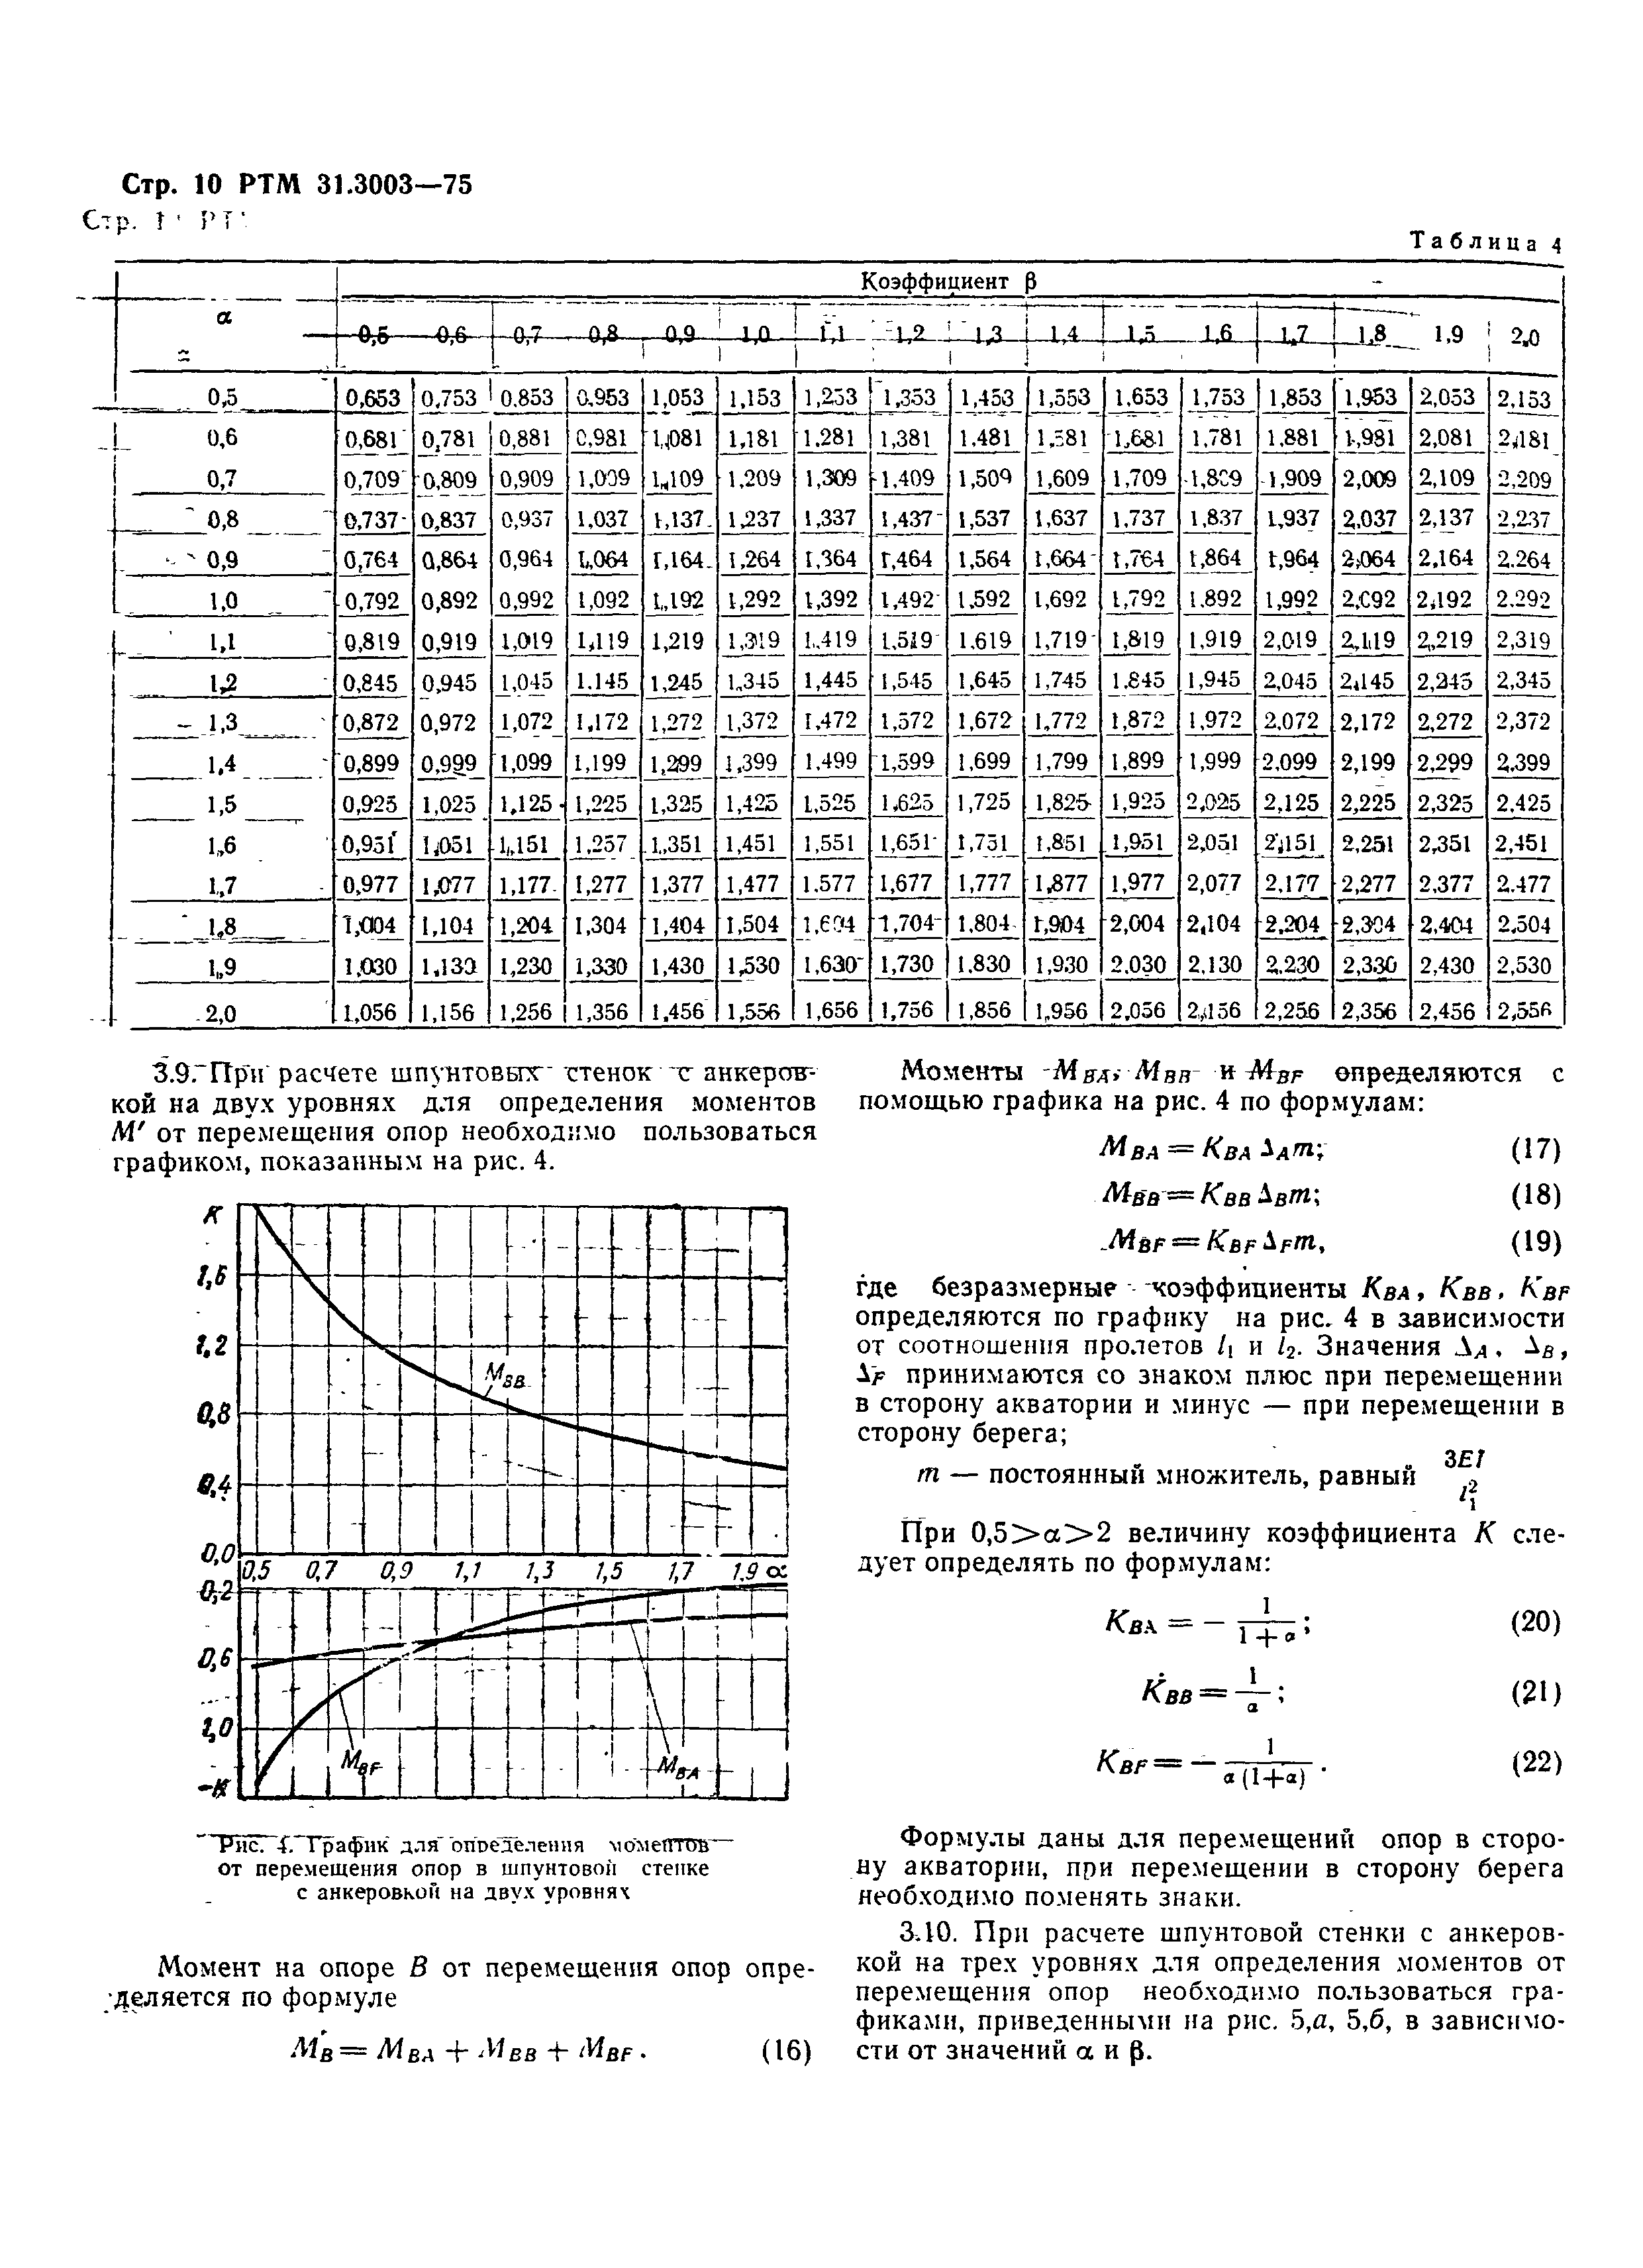 РТМ 31.3003-75